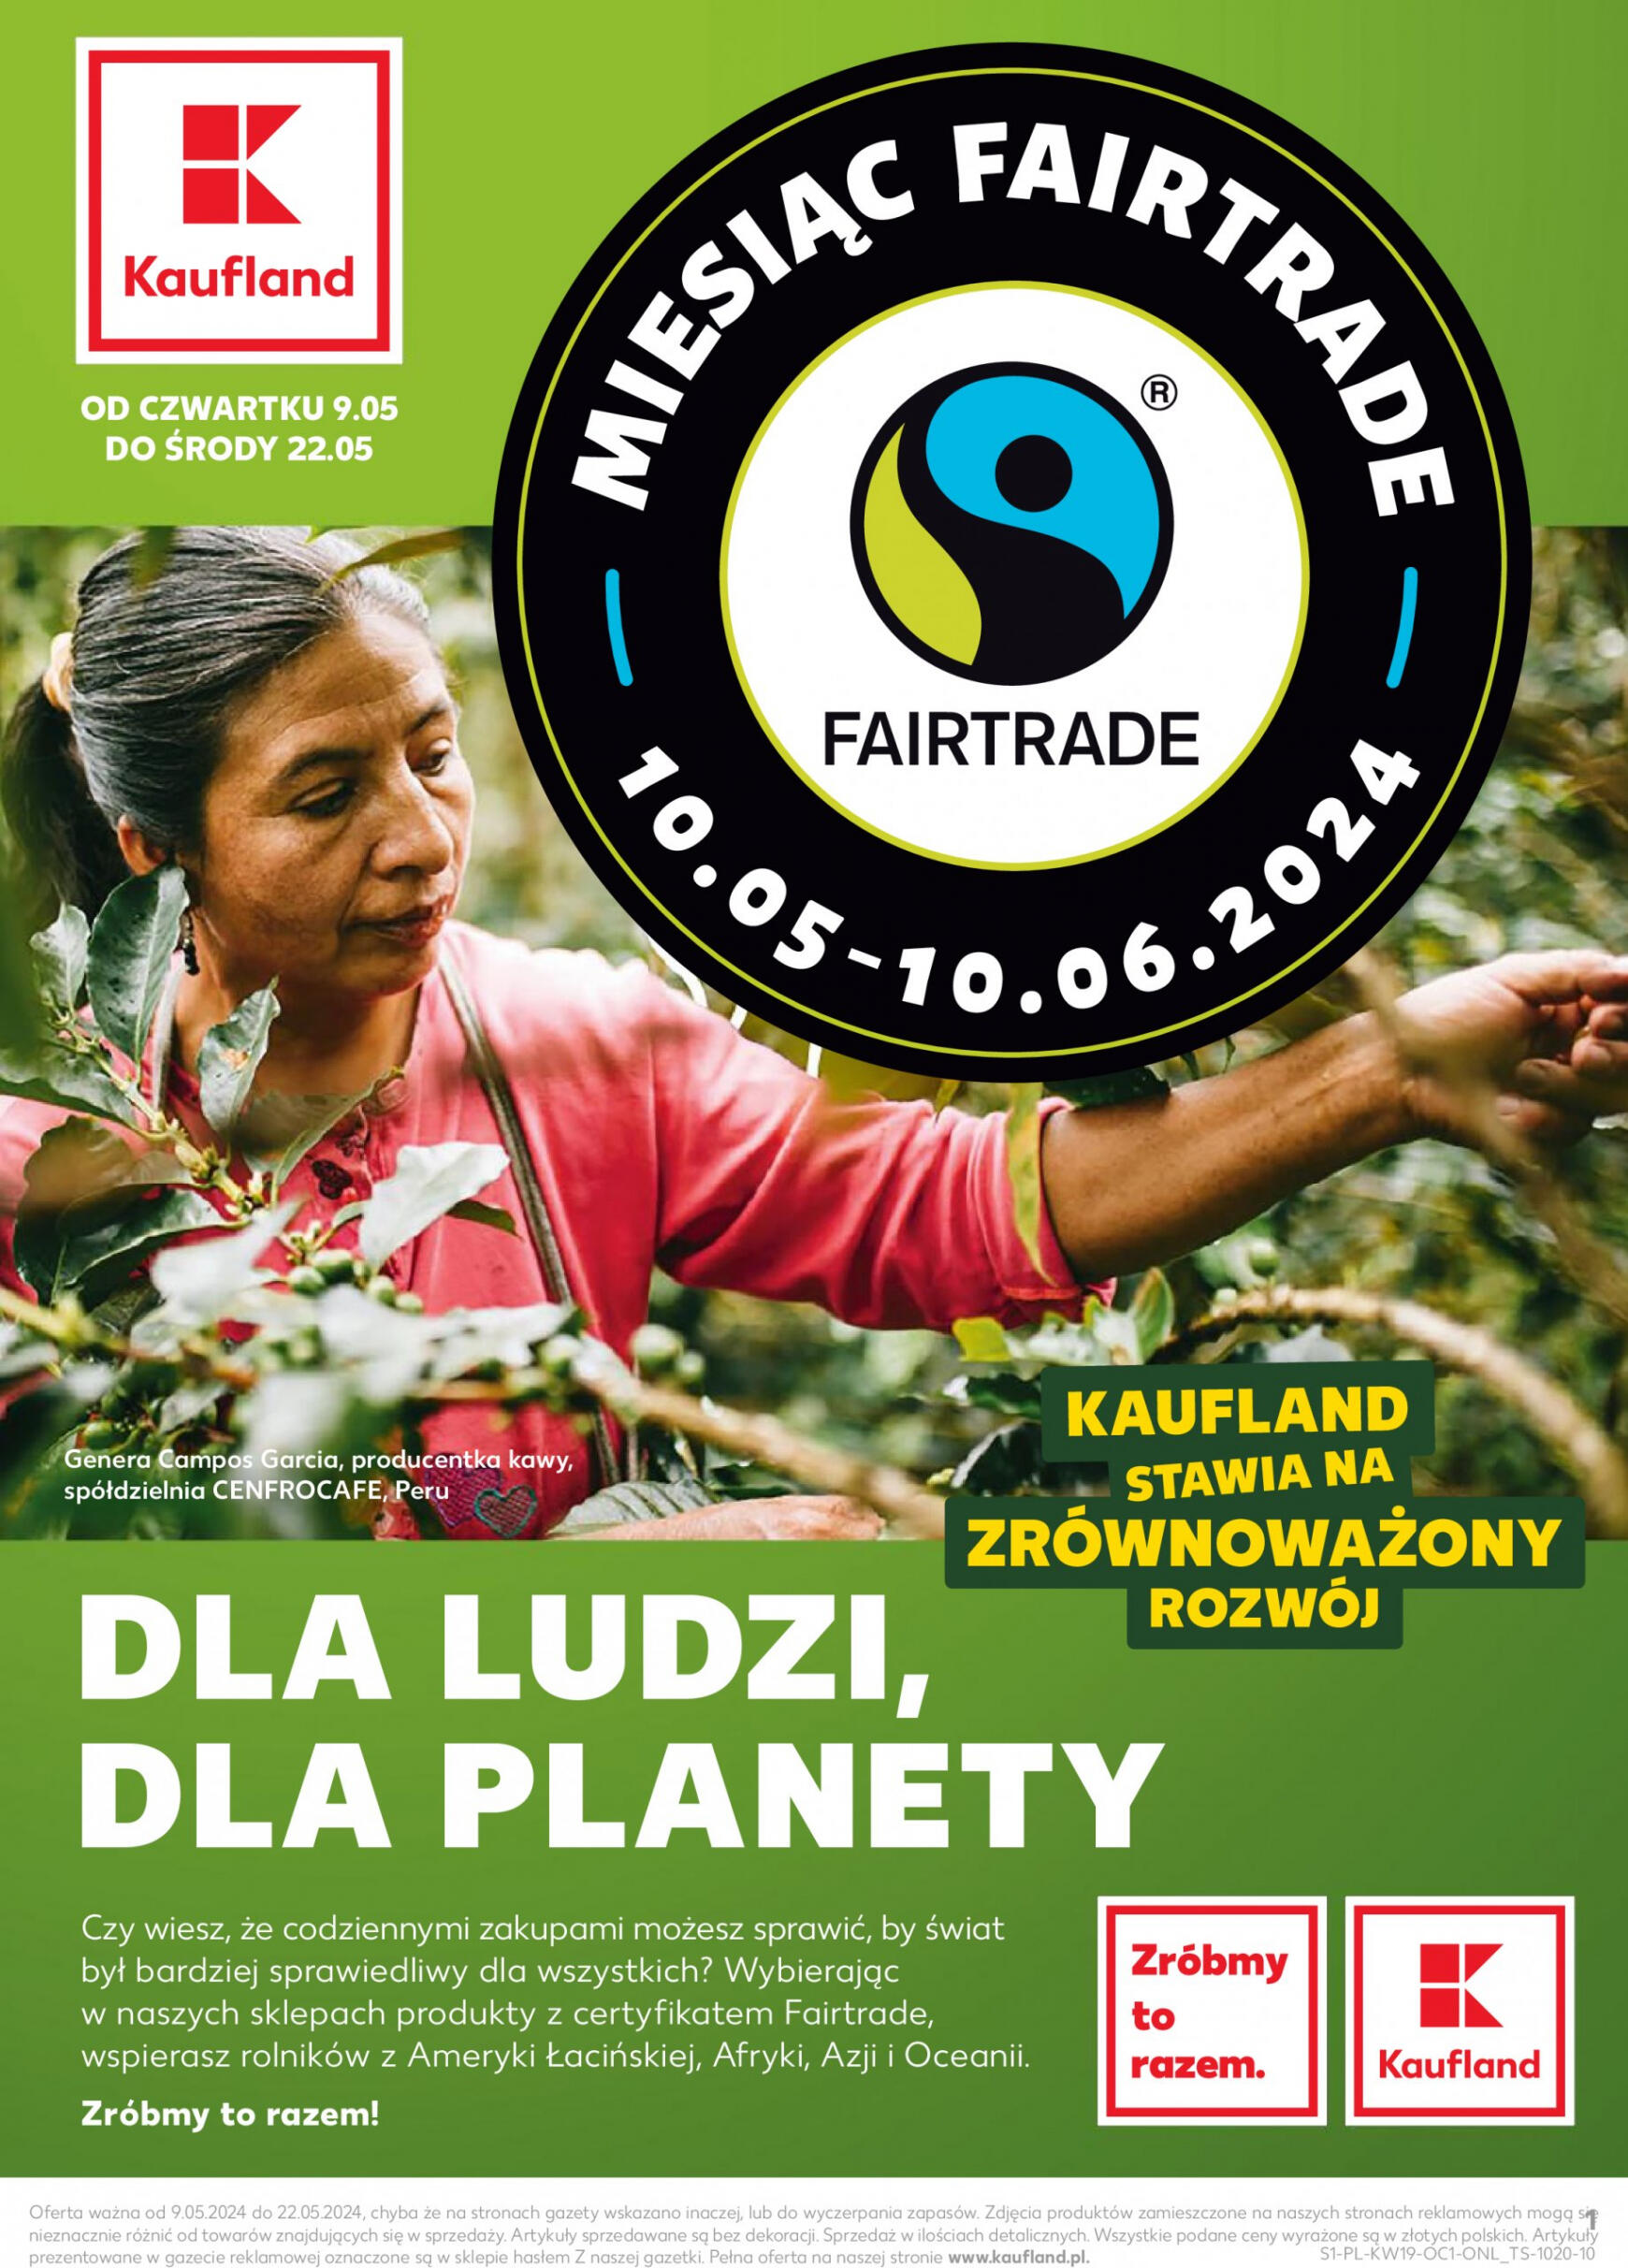 kaufland - Kaufland - Mesiąc Fairtrade gazetka aktualna ważna od 09.05. - 22.05.